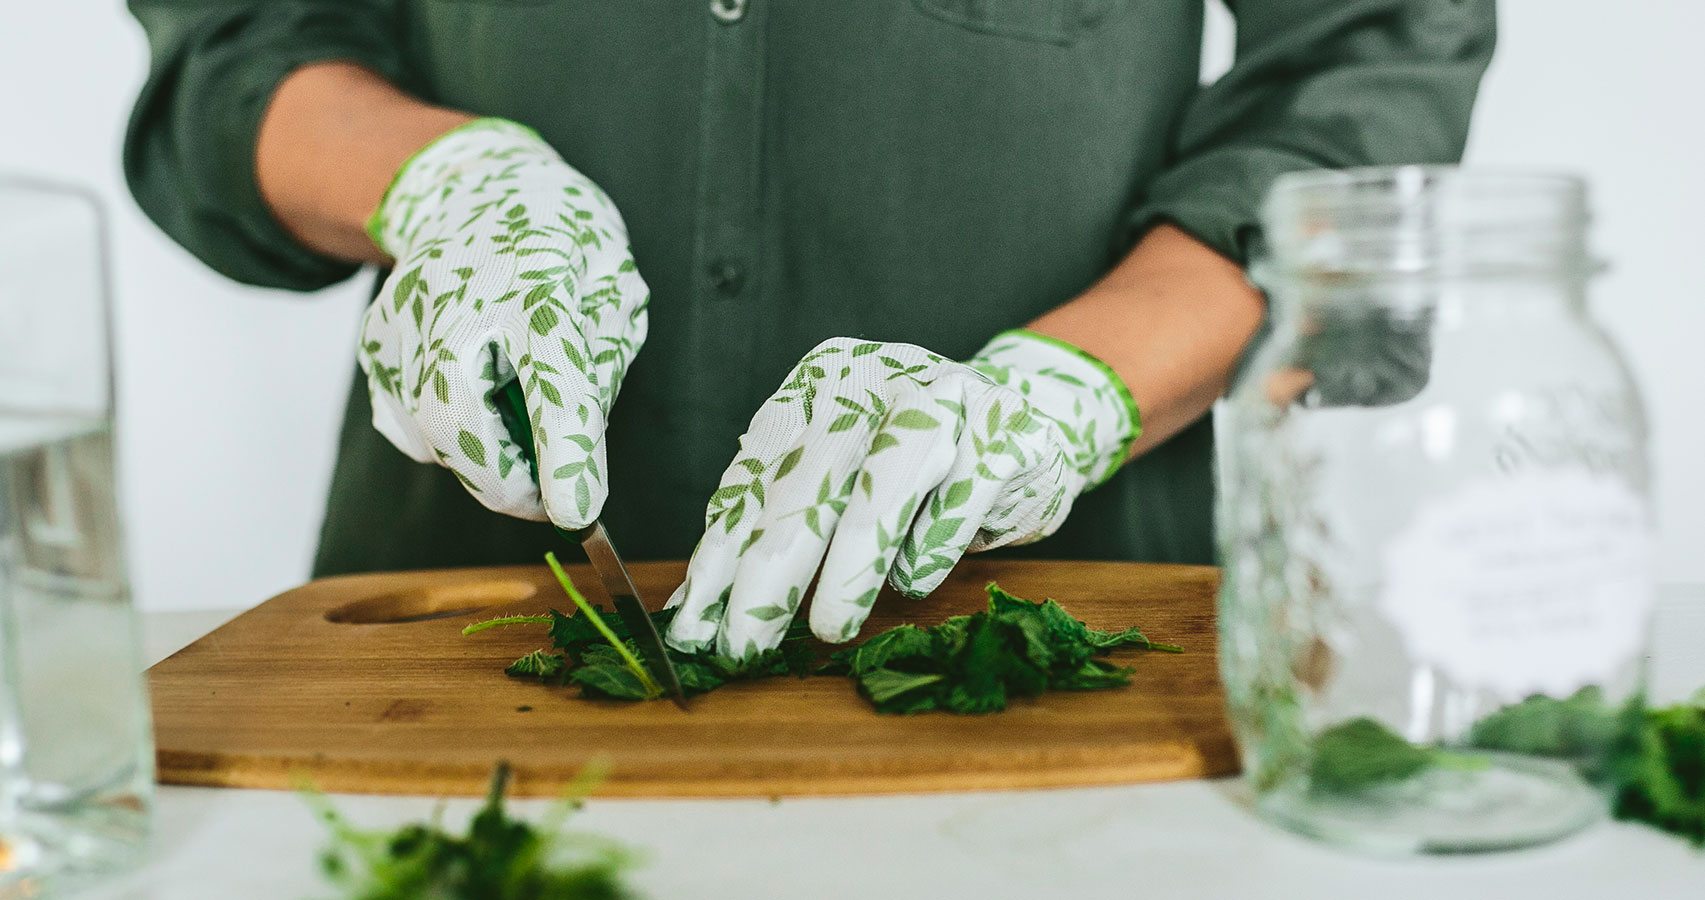 gloved hands cutting herbs